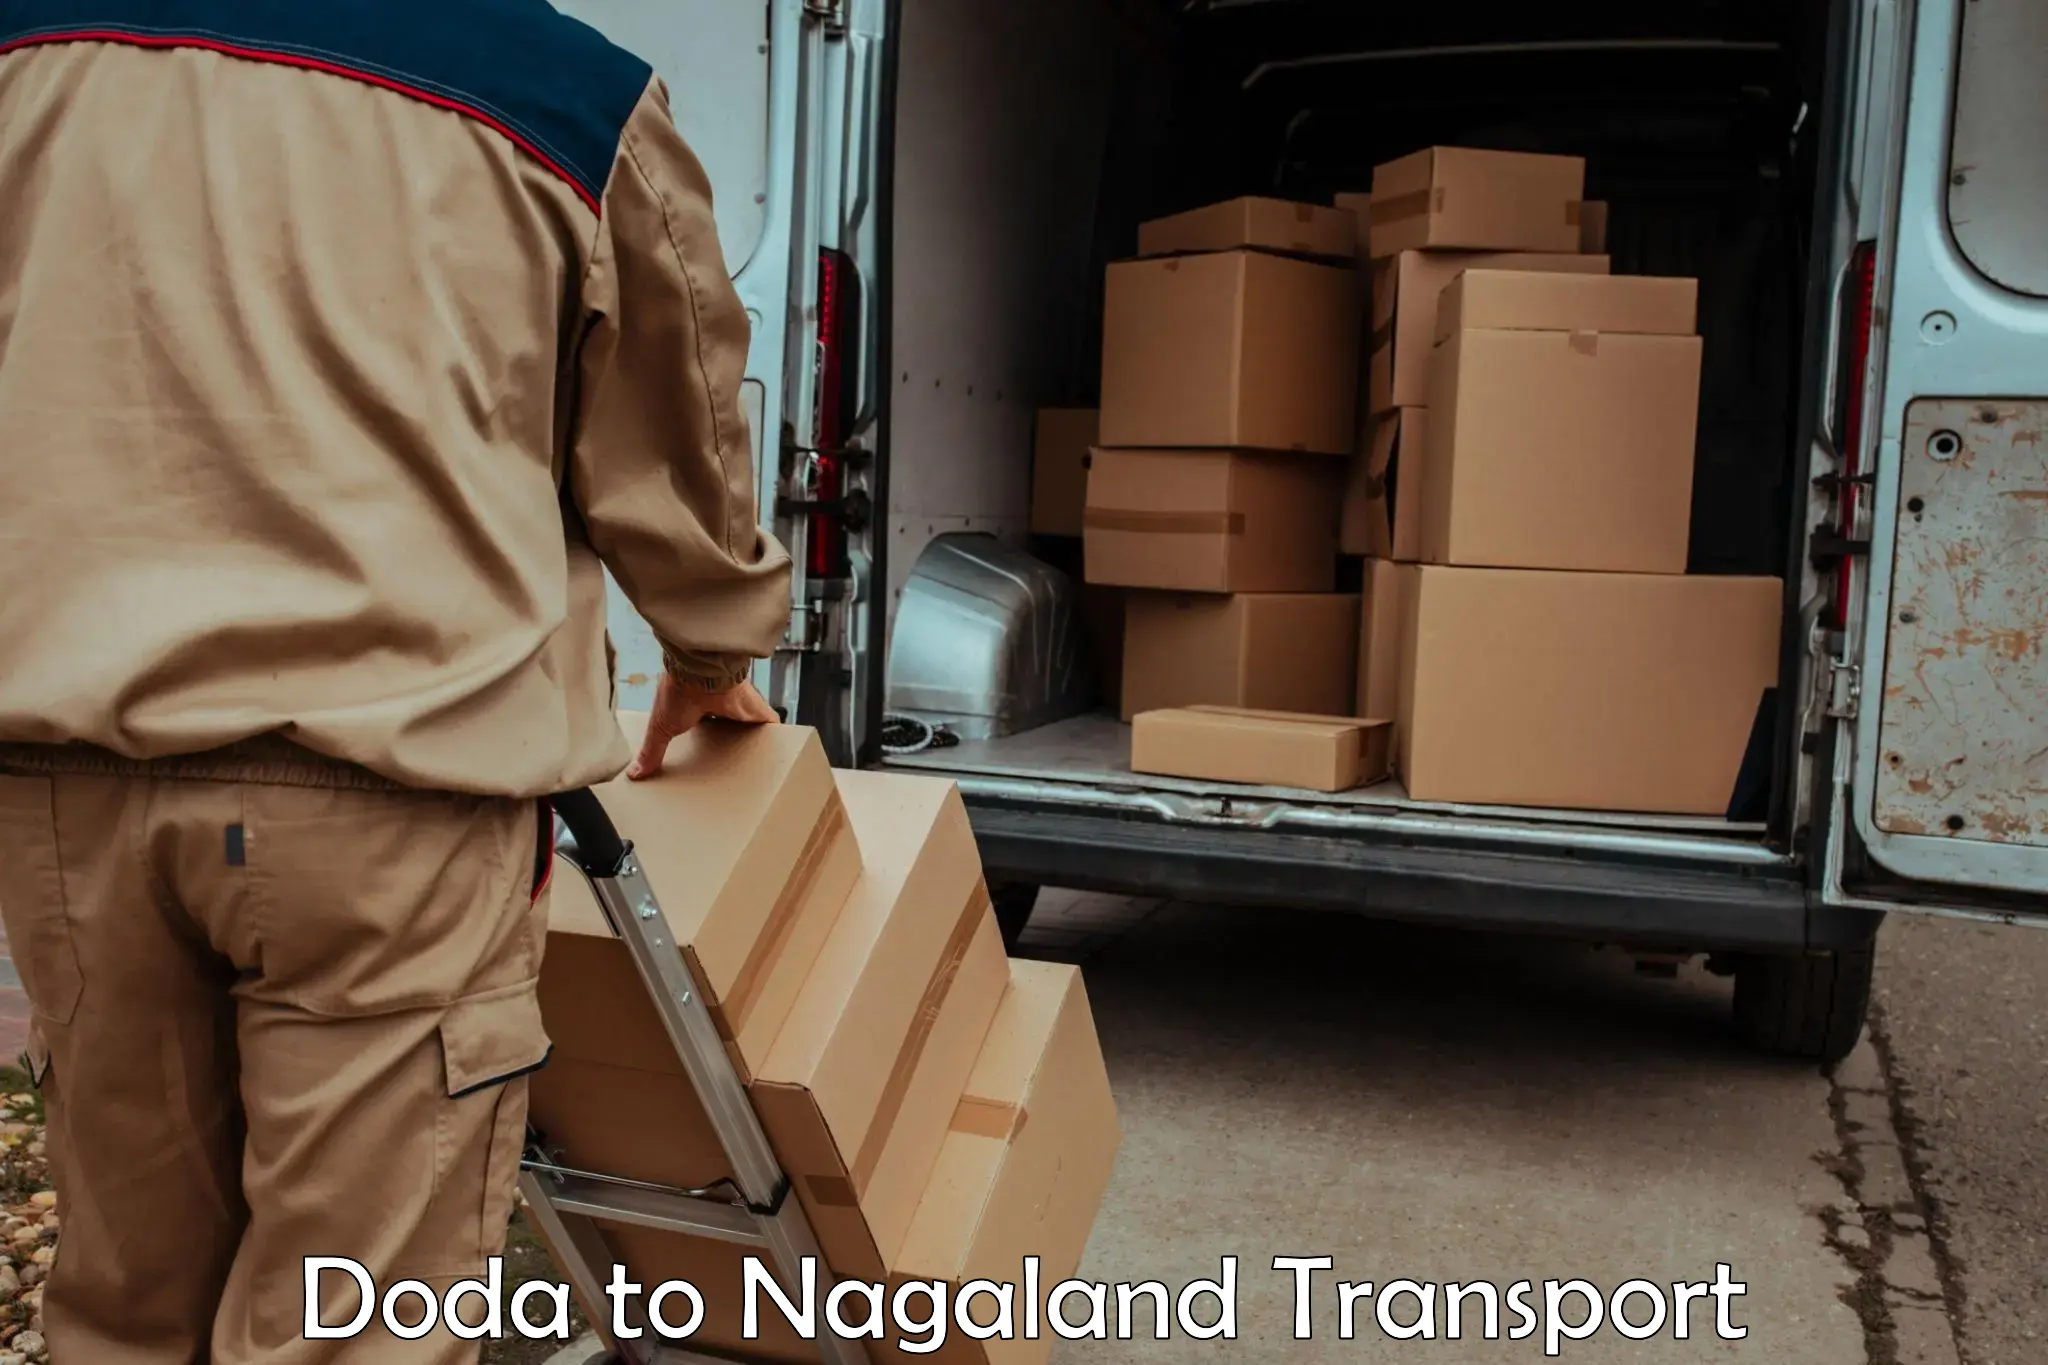 Cycle transportation service Doda to Nagaland